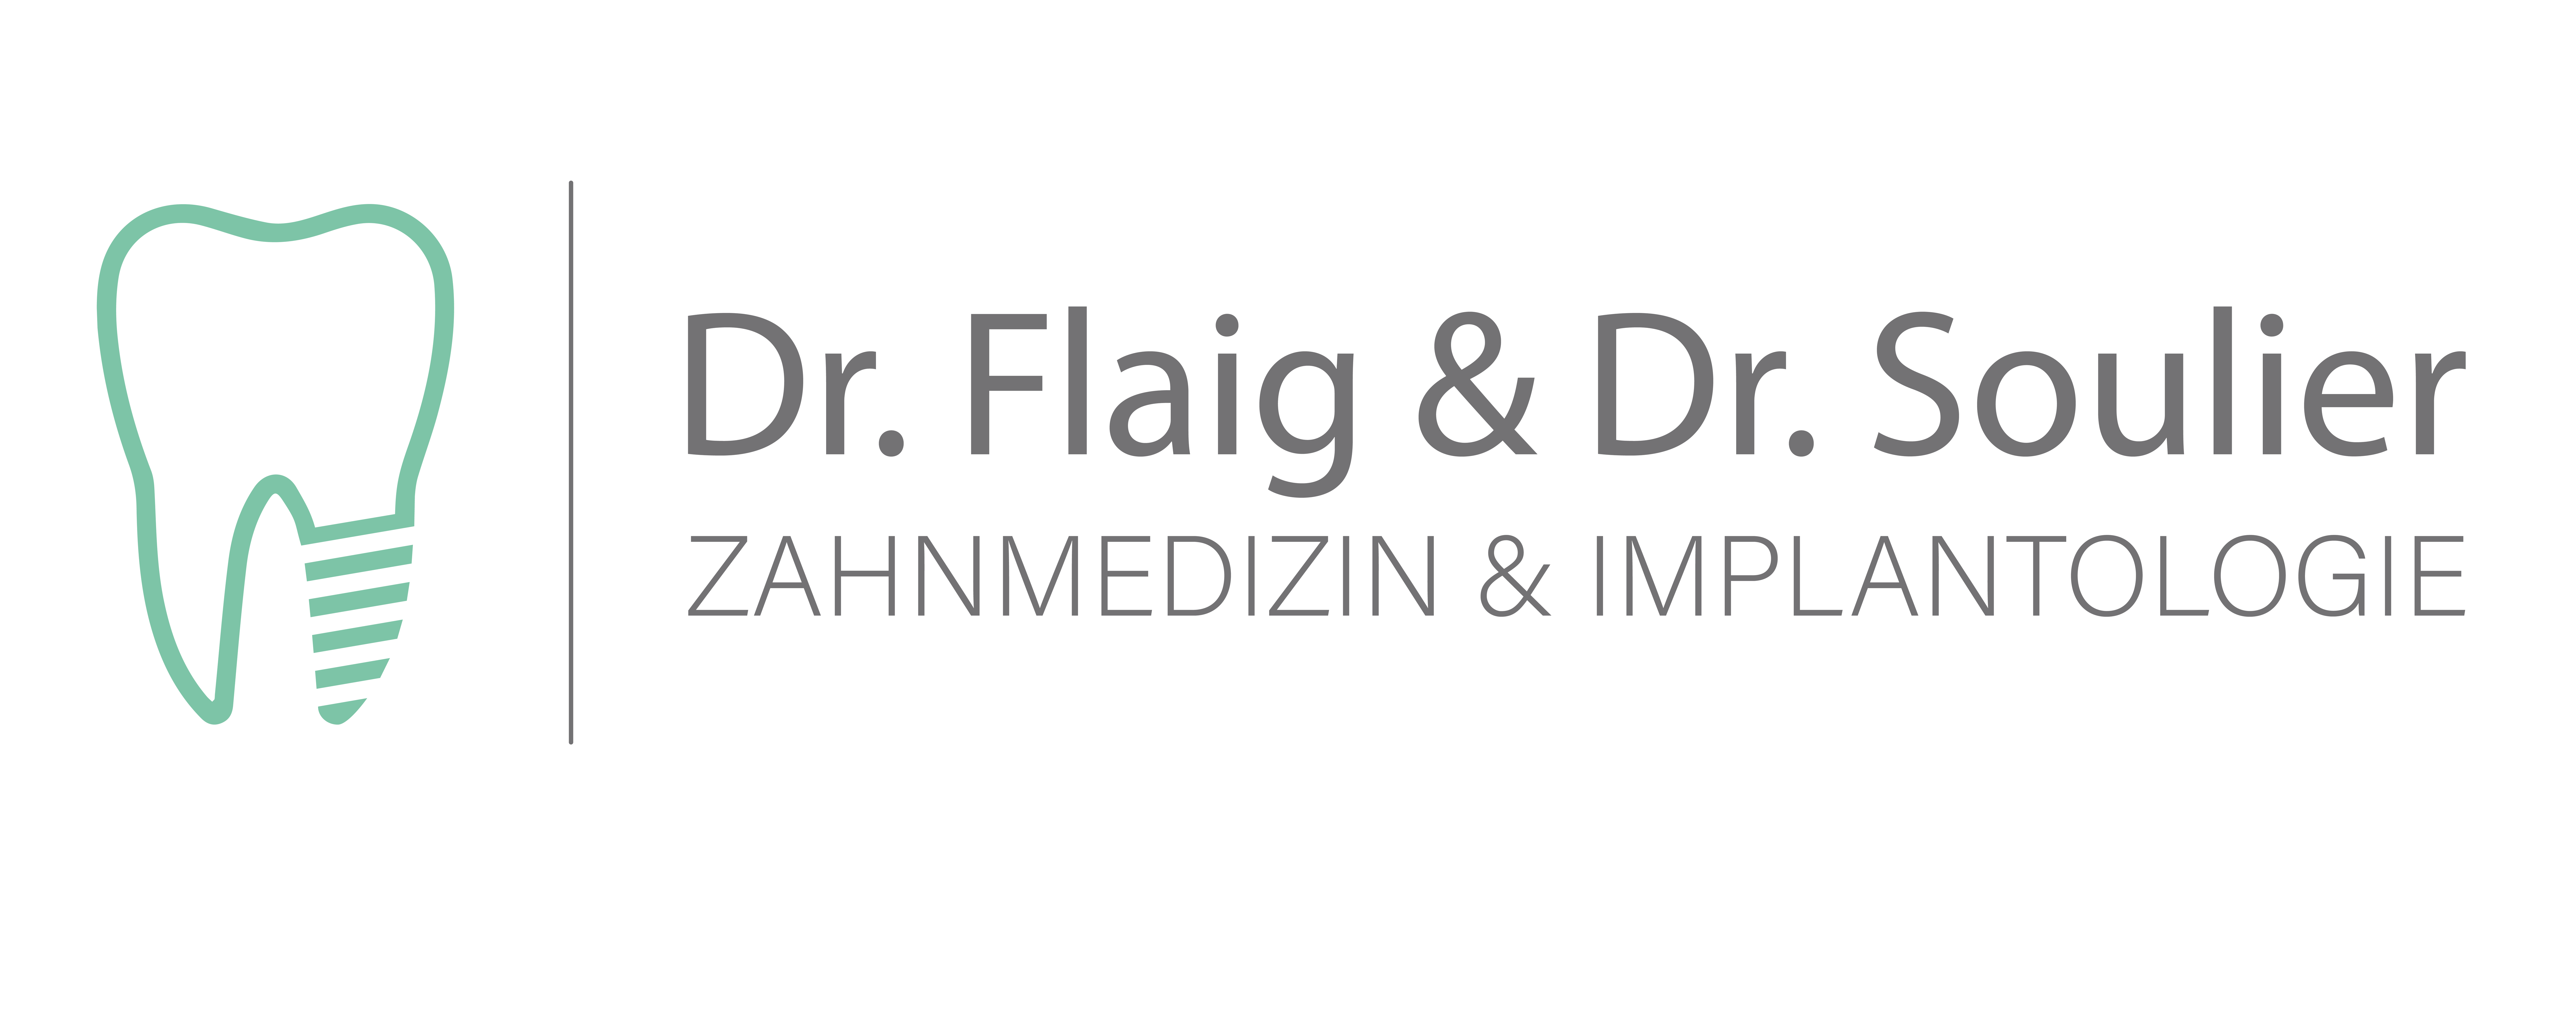 Zahnarztpraxis Dr. Flaig & Dr. Soulier